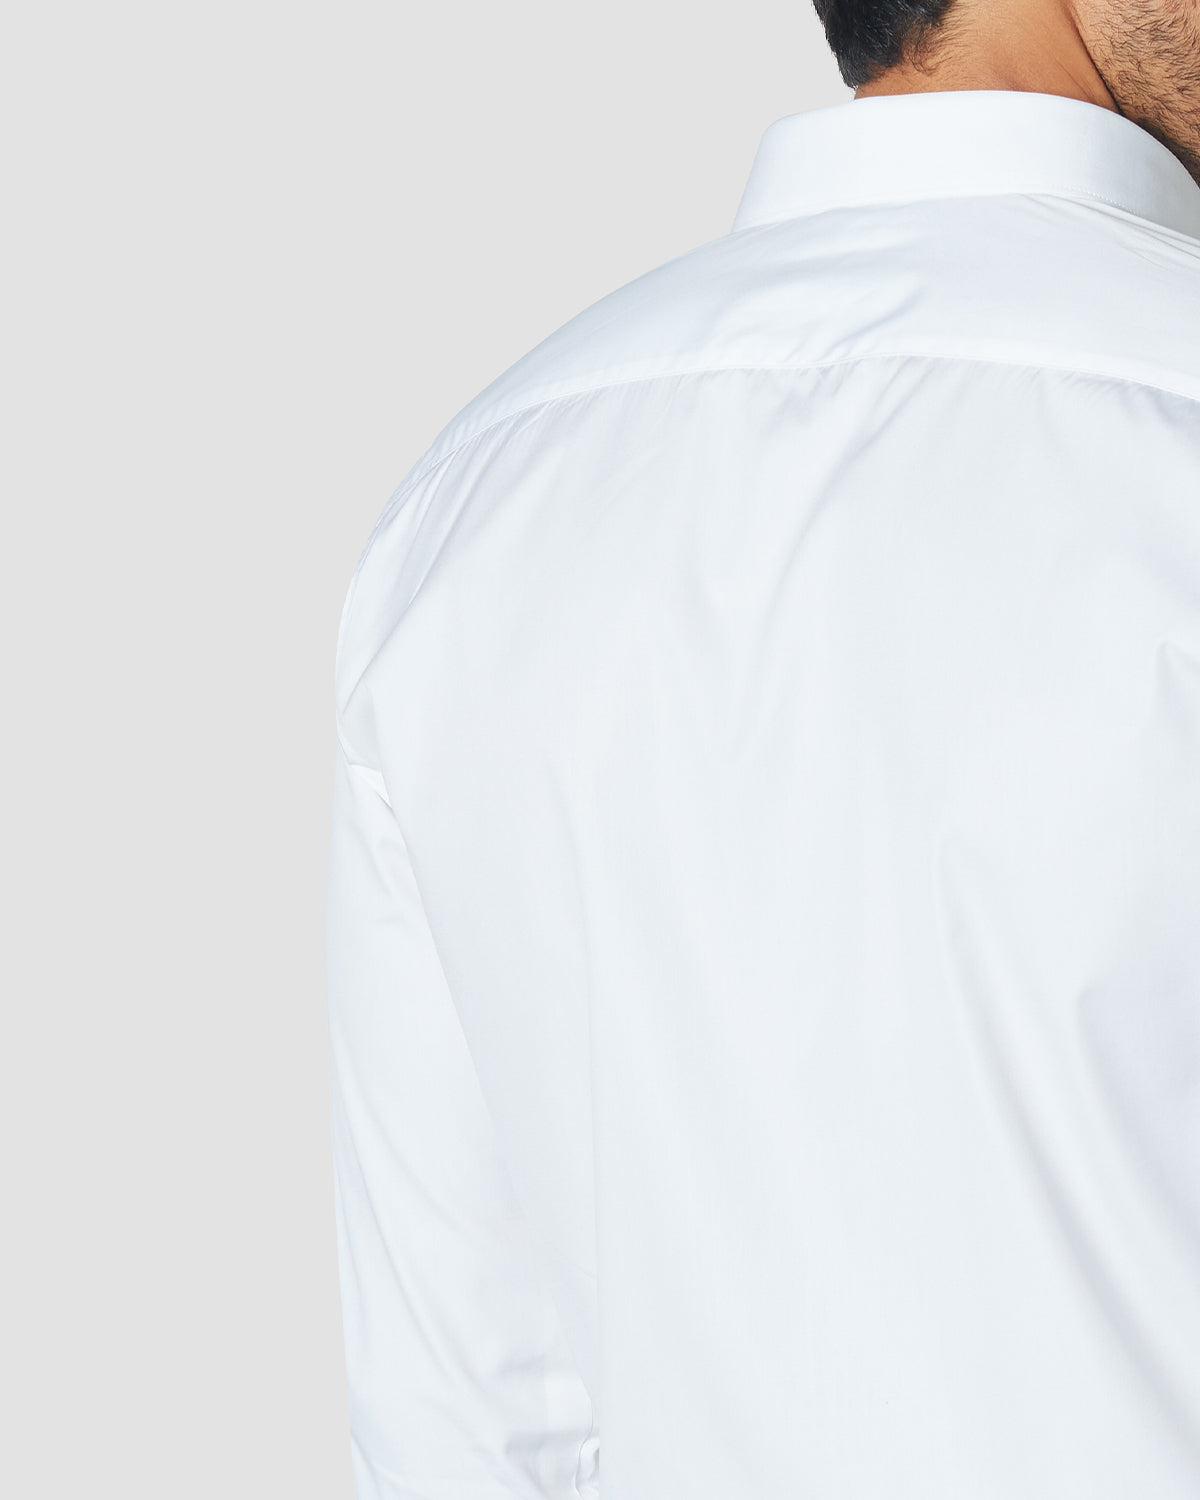 Soktas Ice White 3-button Cuff Shirt